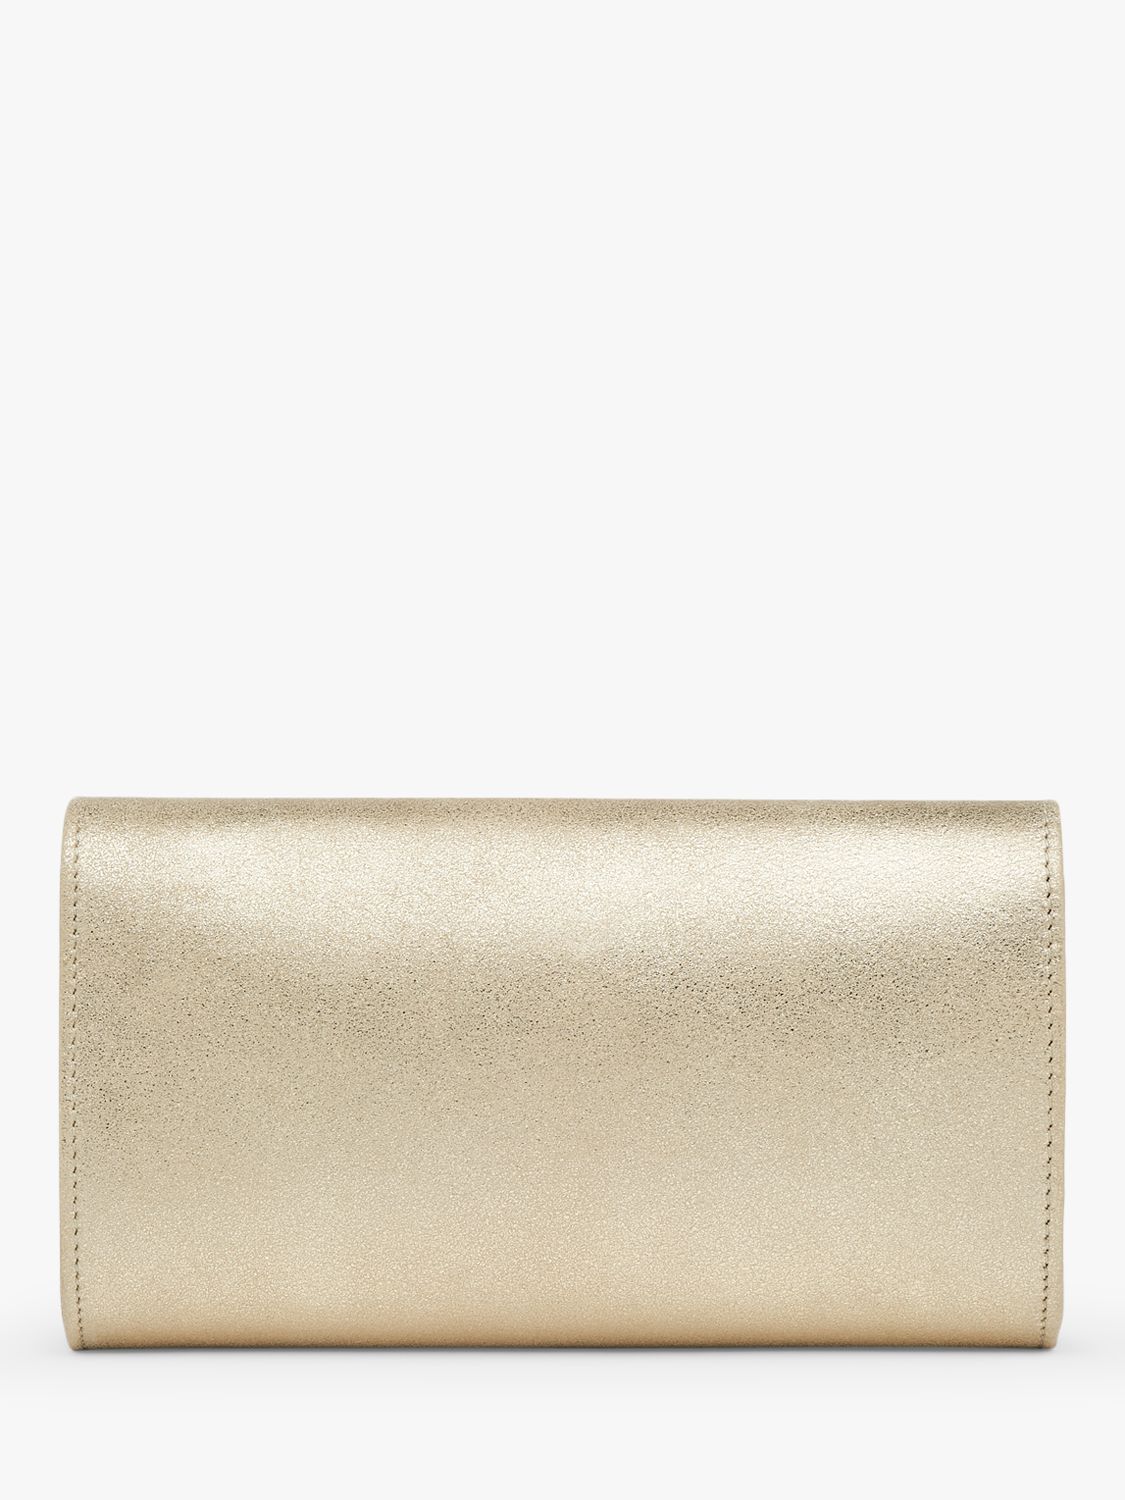 L.K.Bennett Lucy Envelope Leather Clutch Bag, Gold